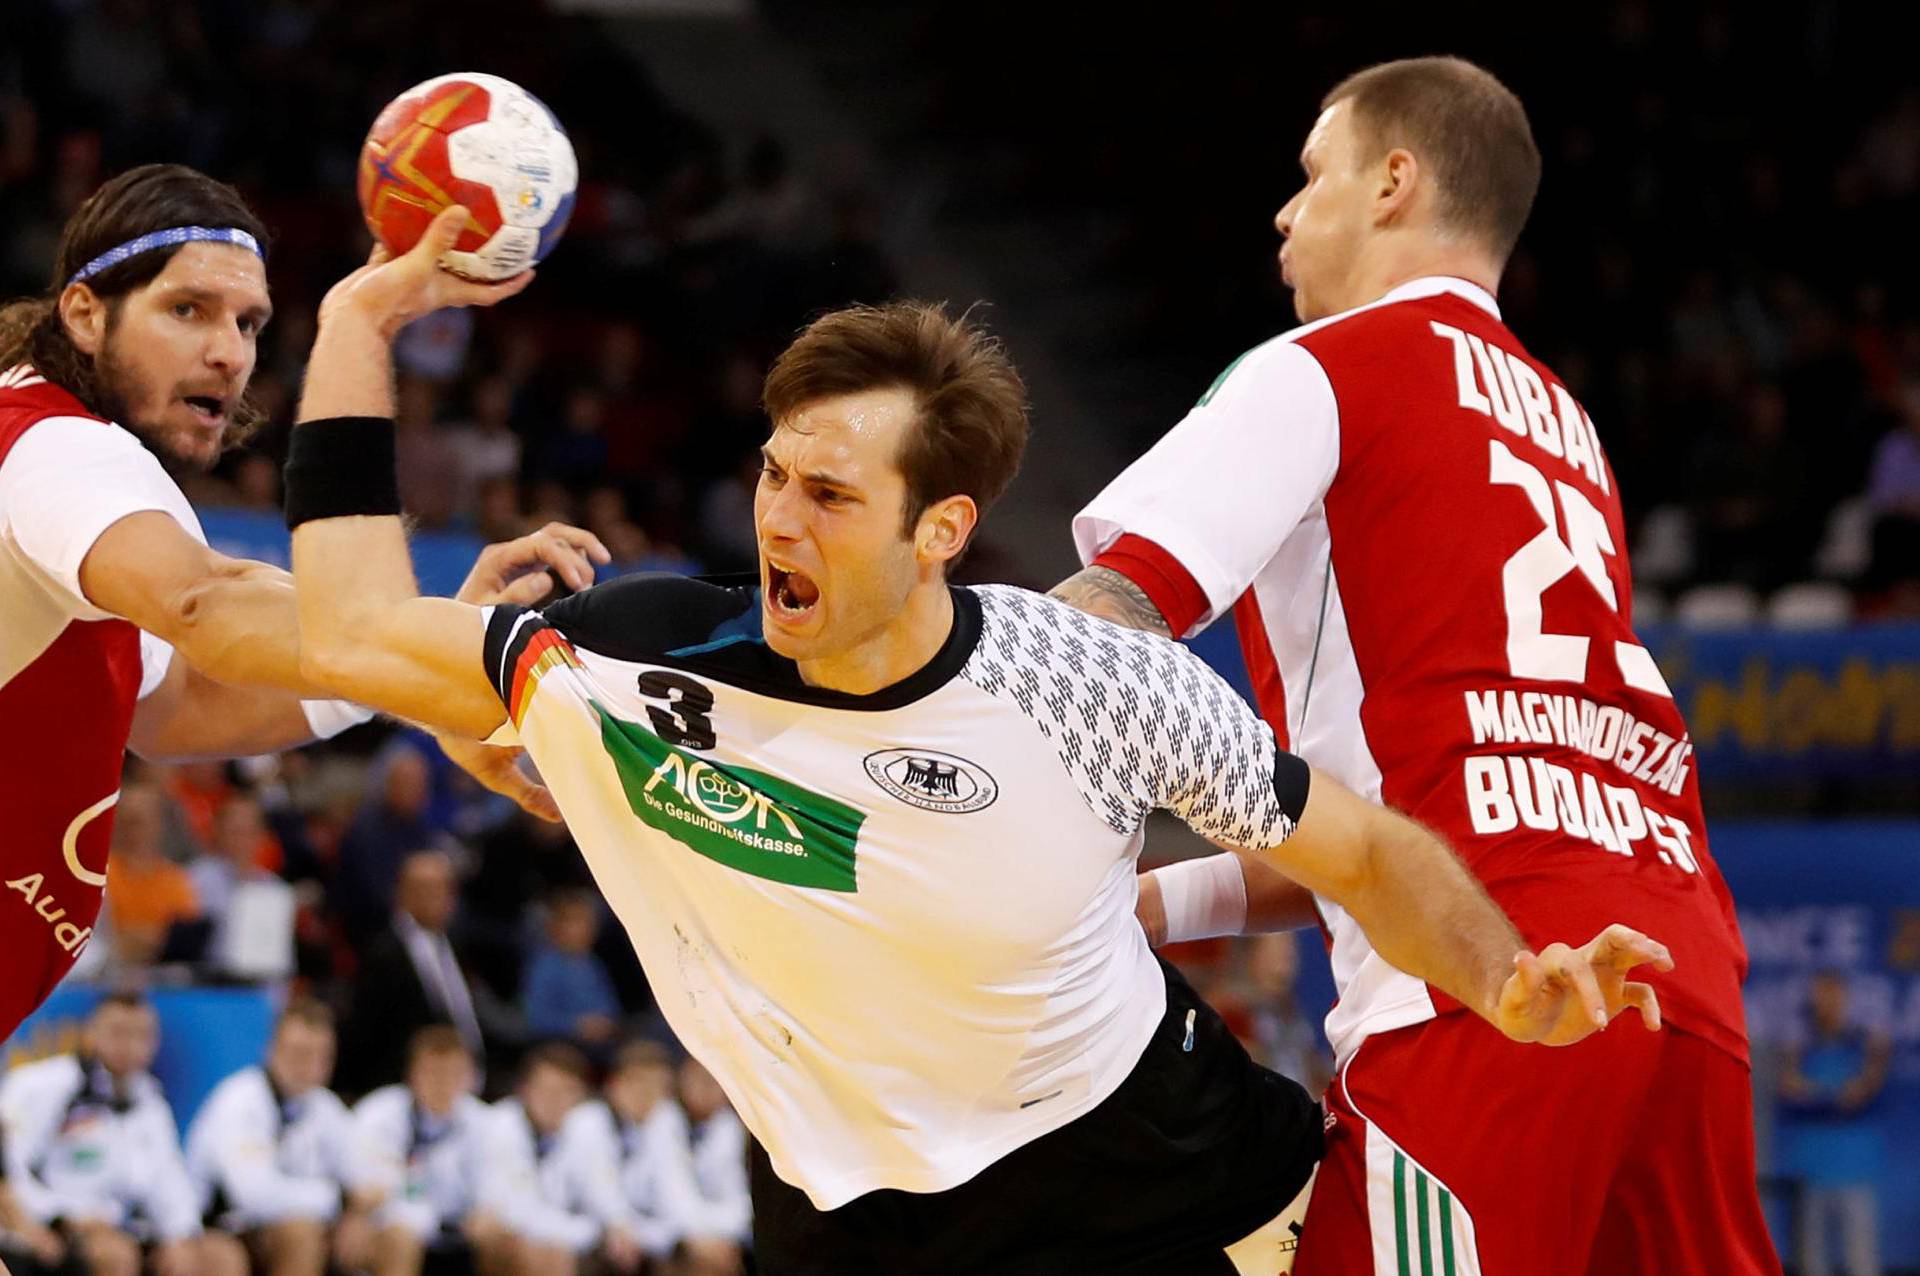 Men's Handball - Germany v Hungary - 2017 Men's World Championship Main Round - Group C